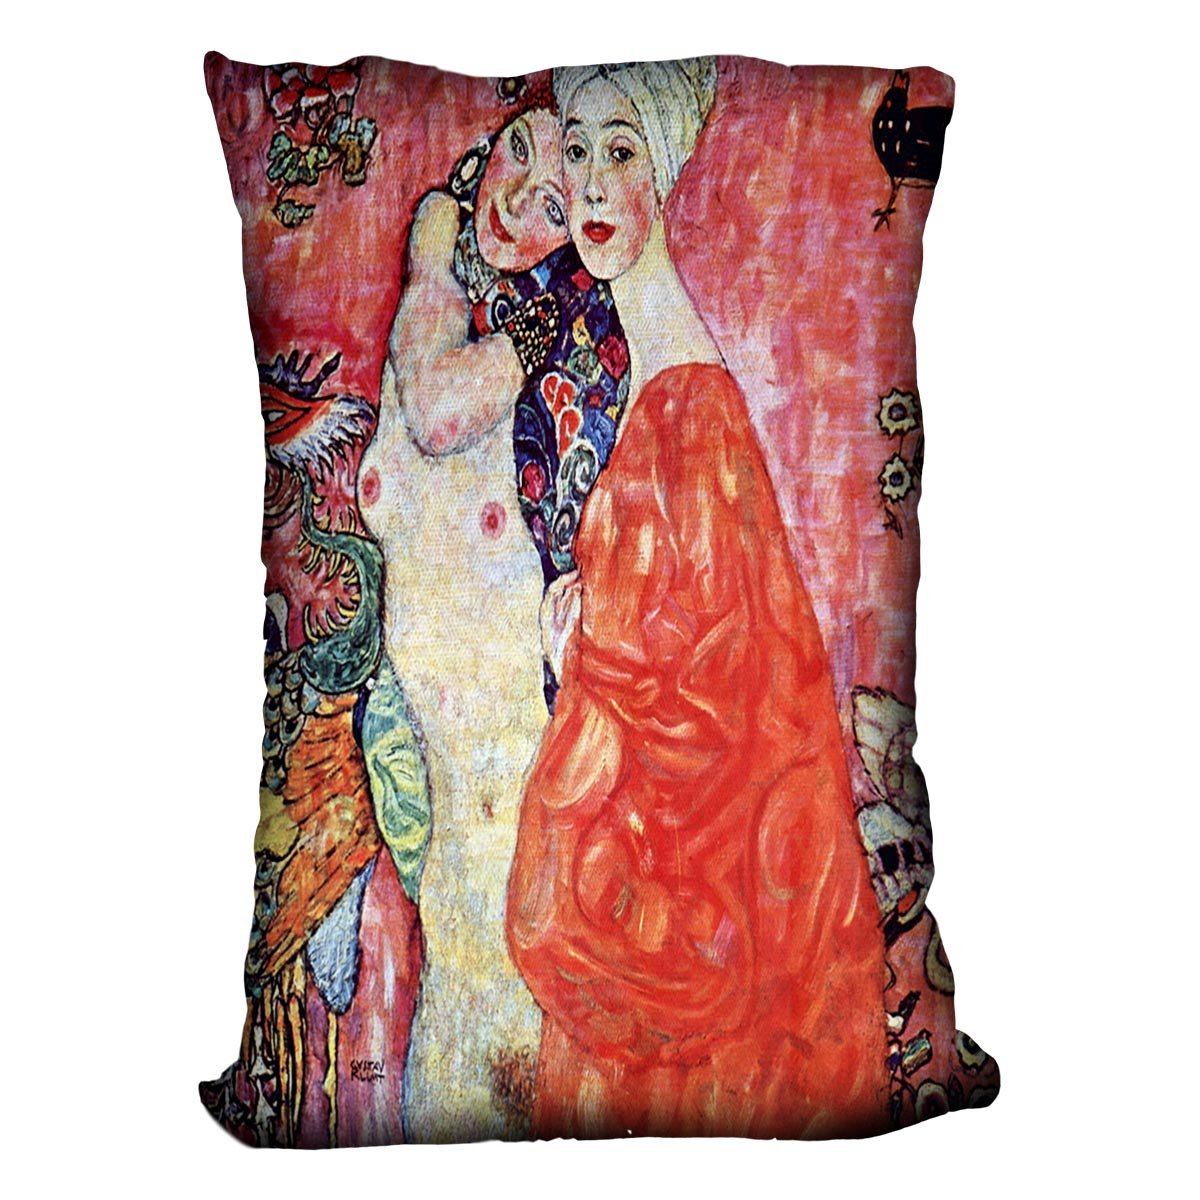 The girlfriends by Klimt Throw Pillow